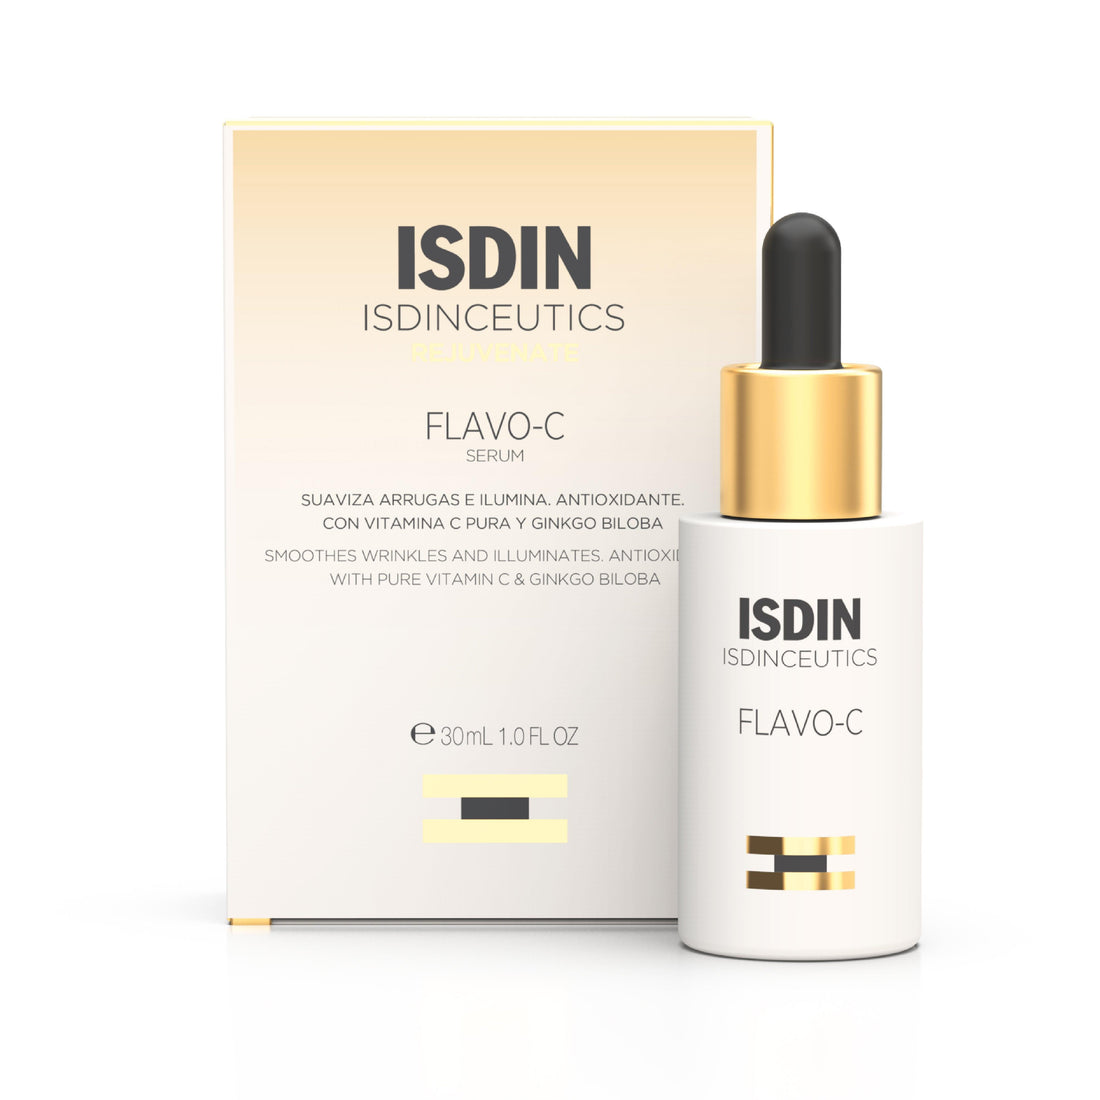 ISDINCEUTICS Flavo-C Serum 30ml ISDIN® - LASKIN